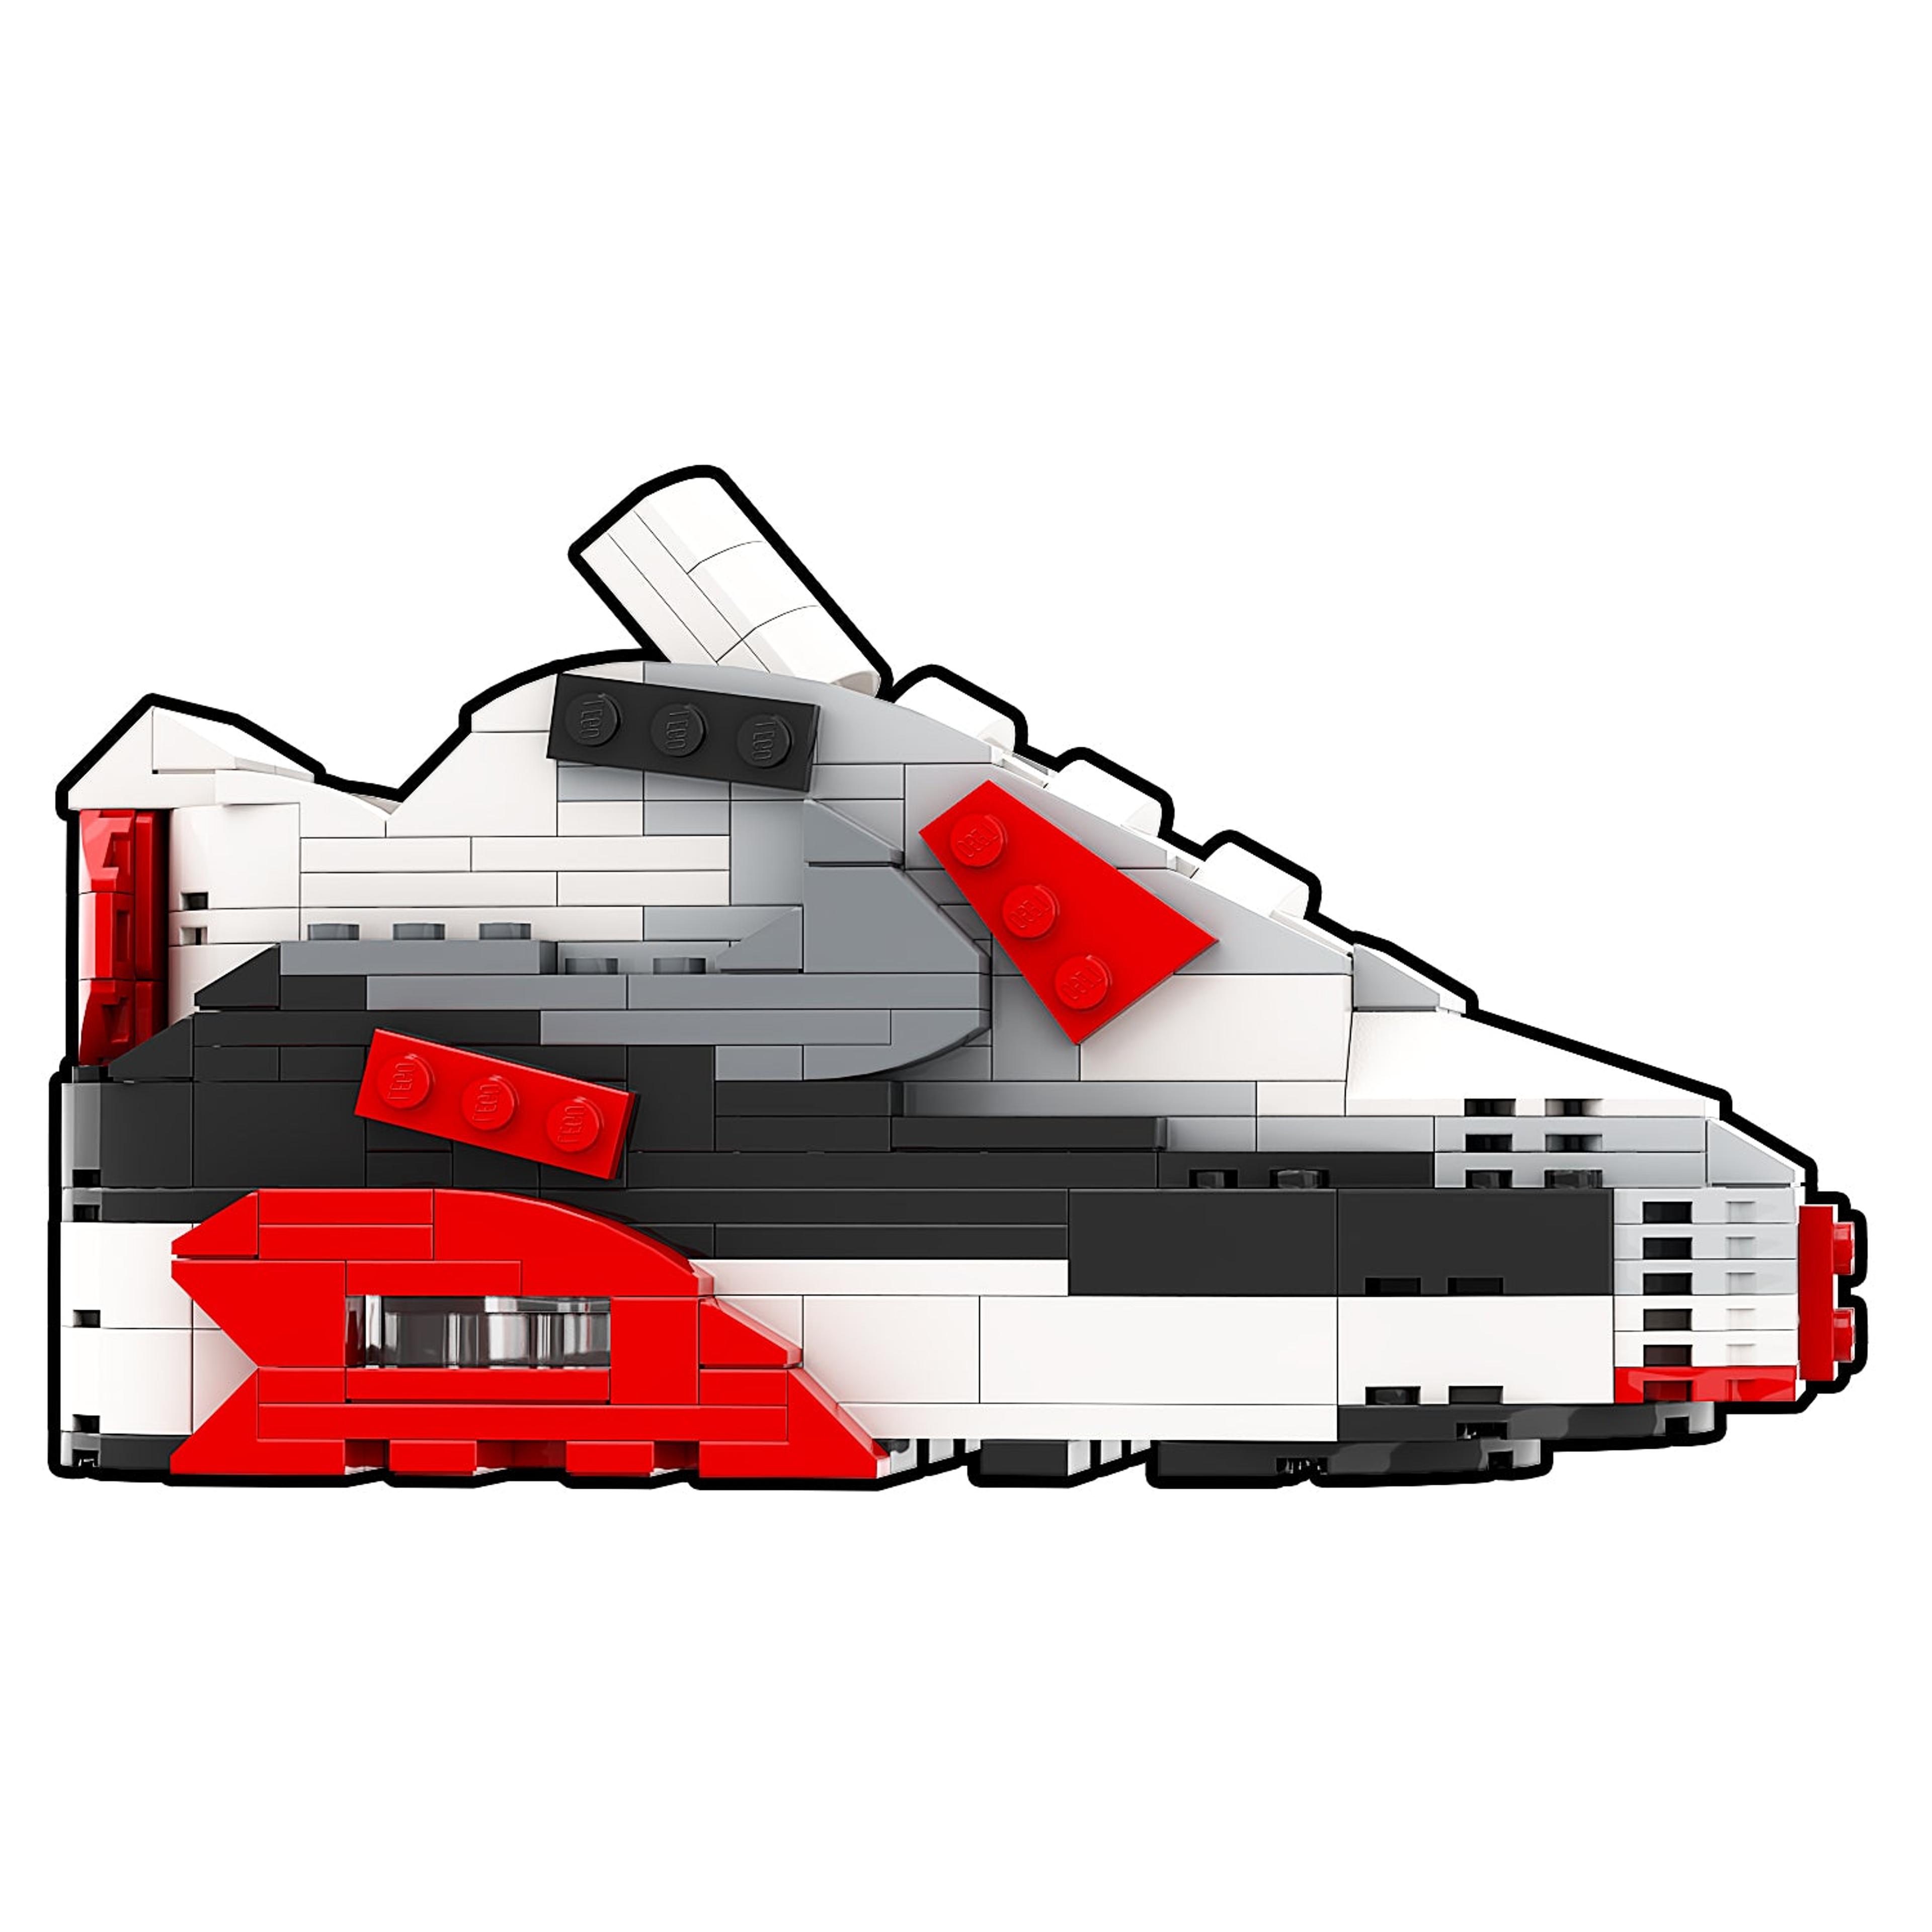 Alternate View 4 of REGULAR "Air Max 90 Infrared" Sneaker Bricks with Mini Figure